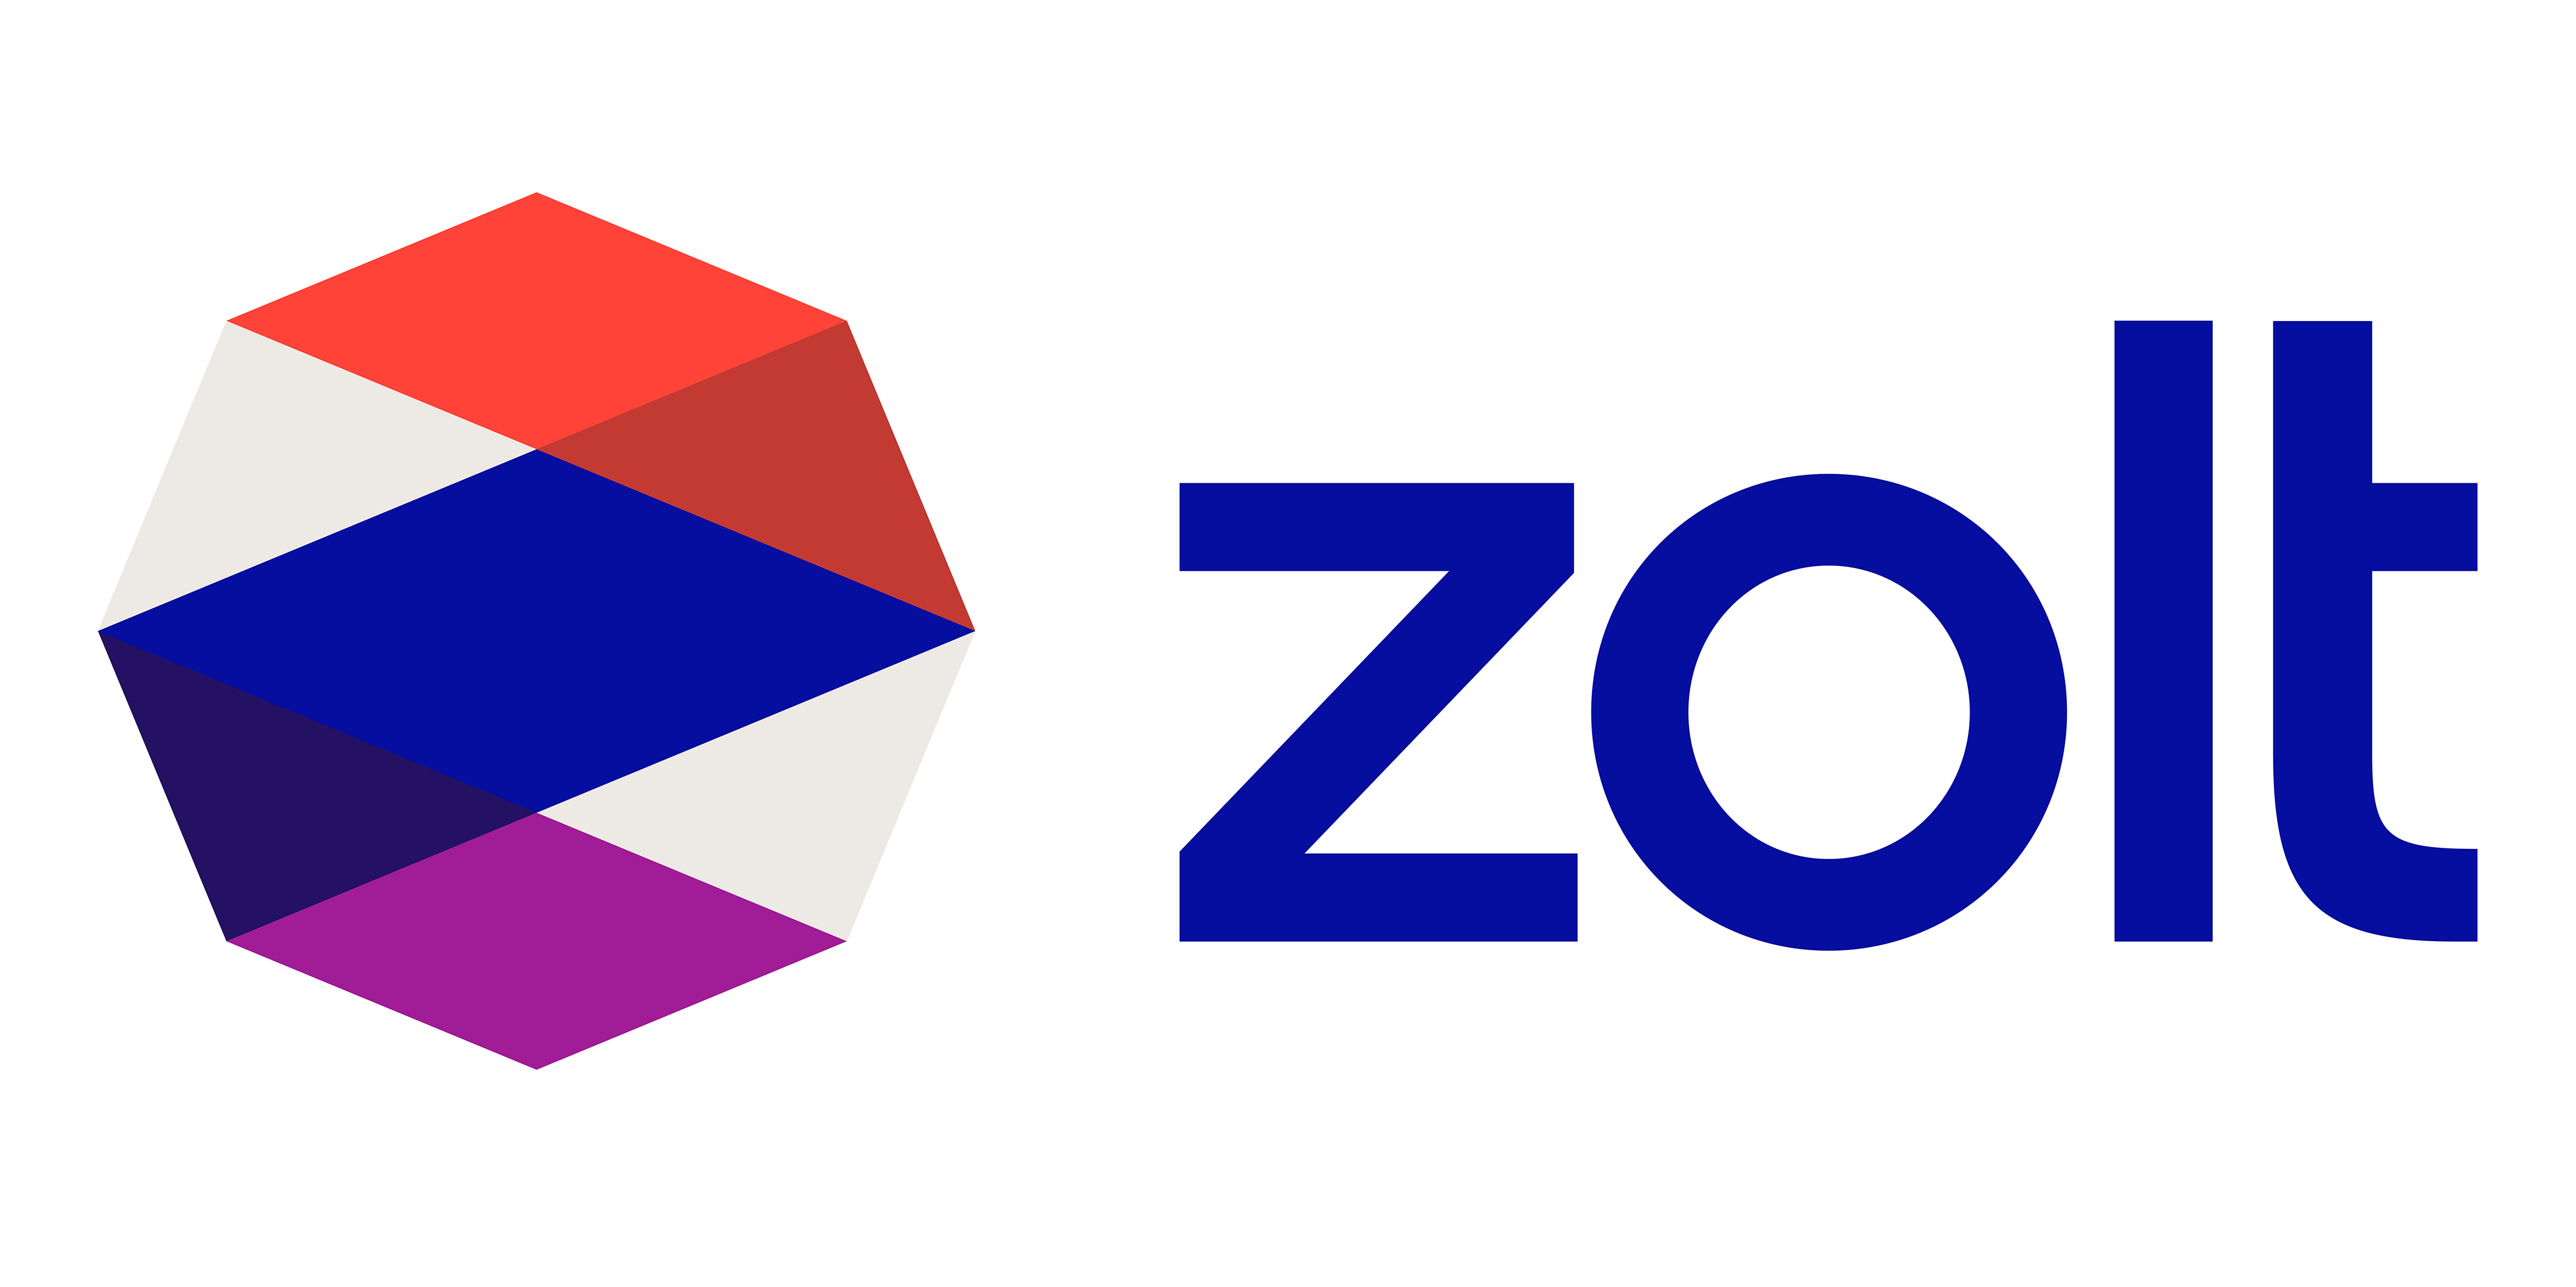 Zolt Logo